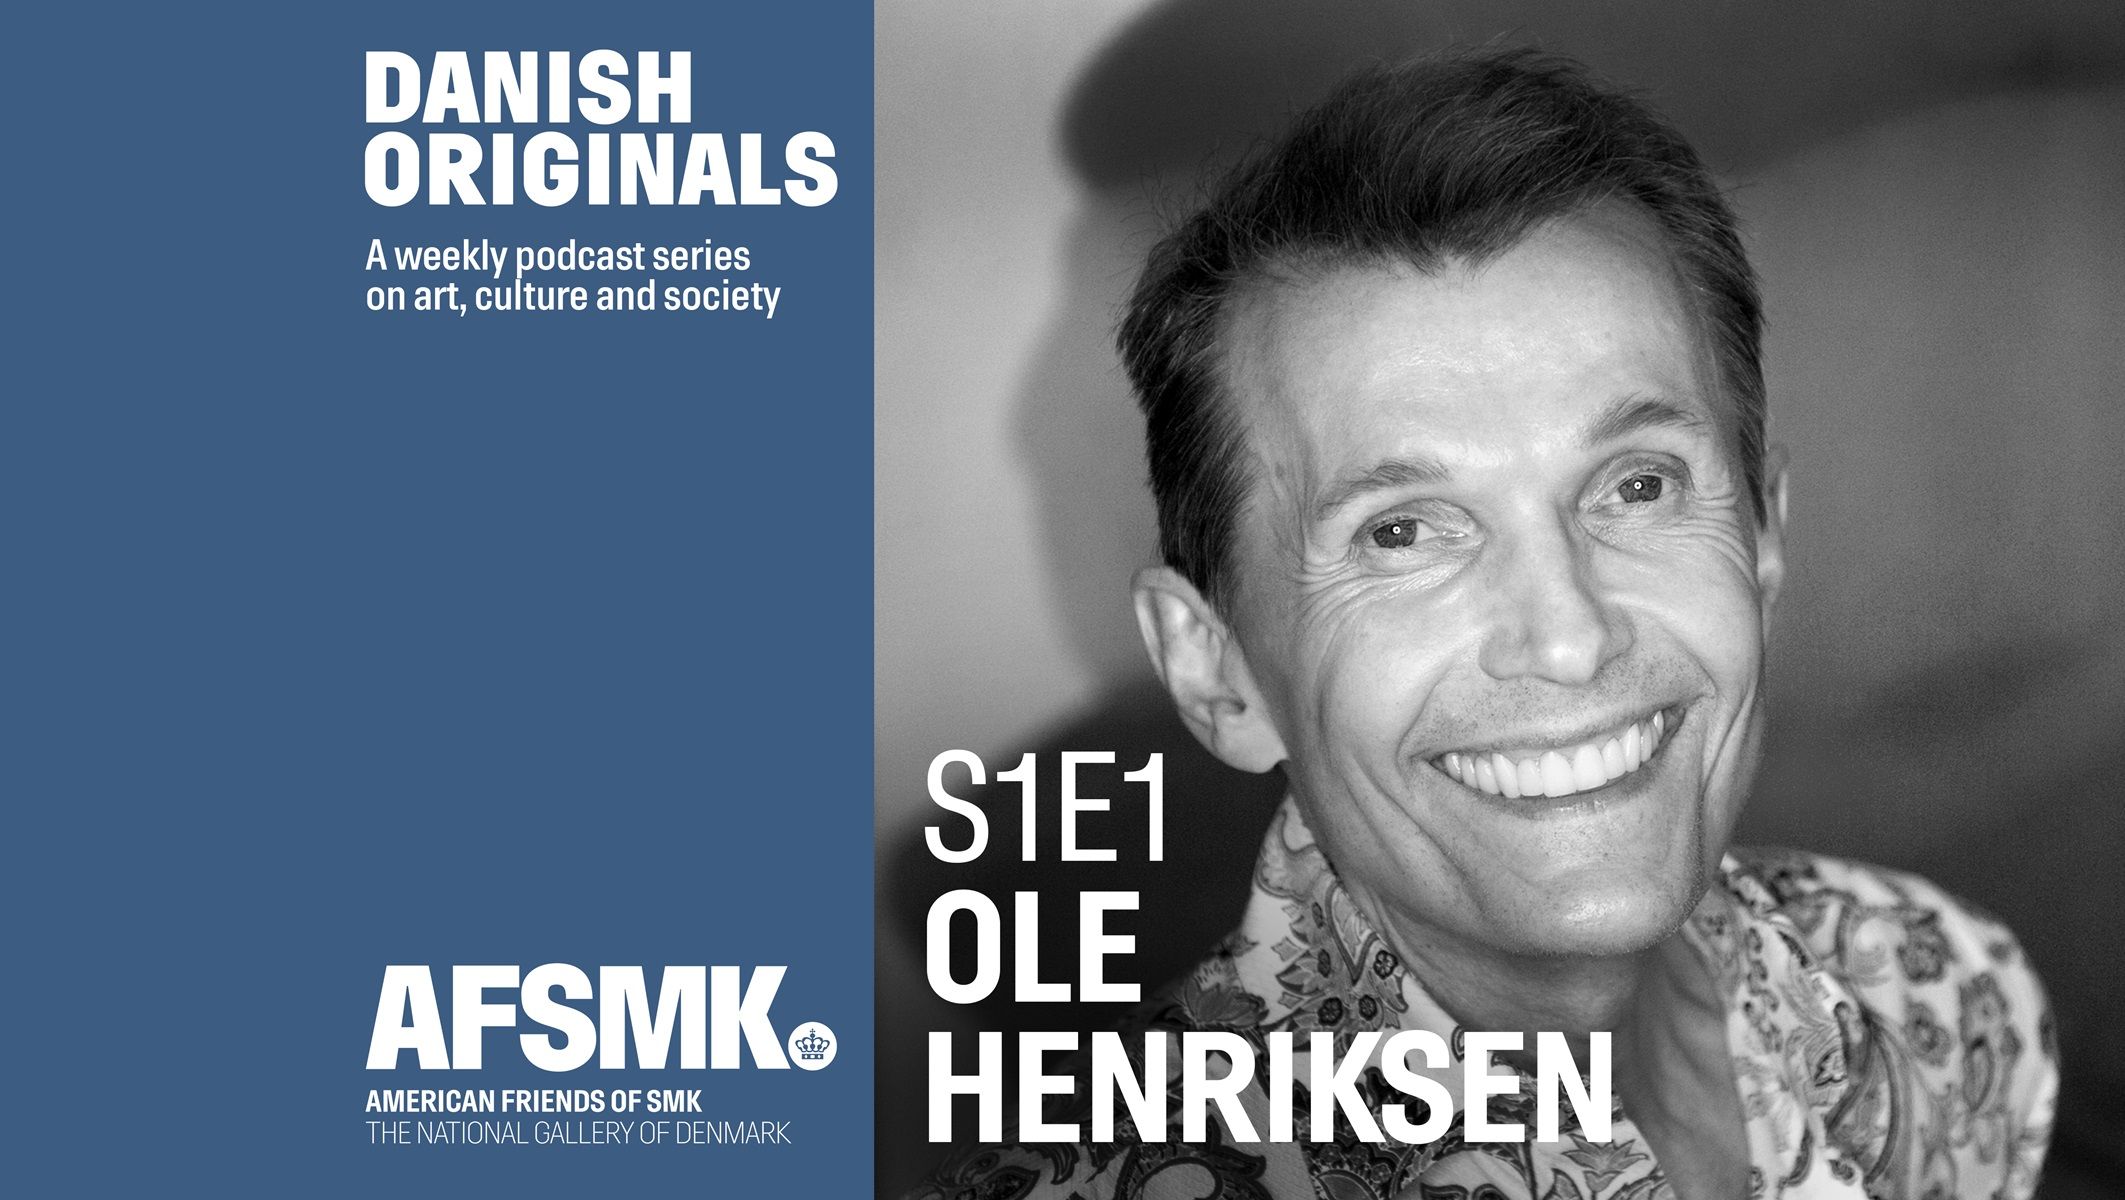 Danish Originals S1 E1: Ole Henriksen